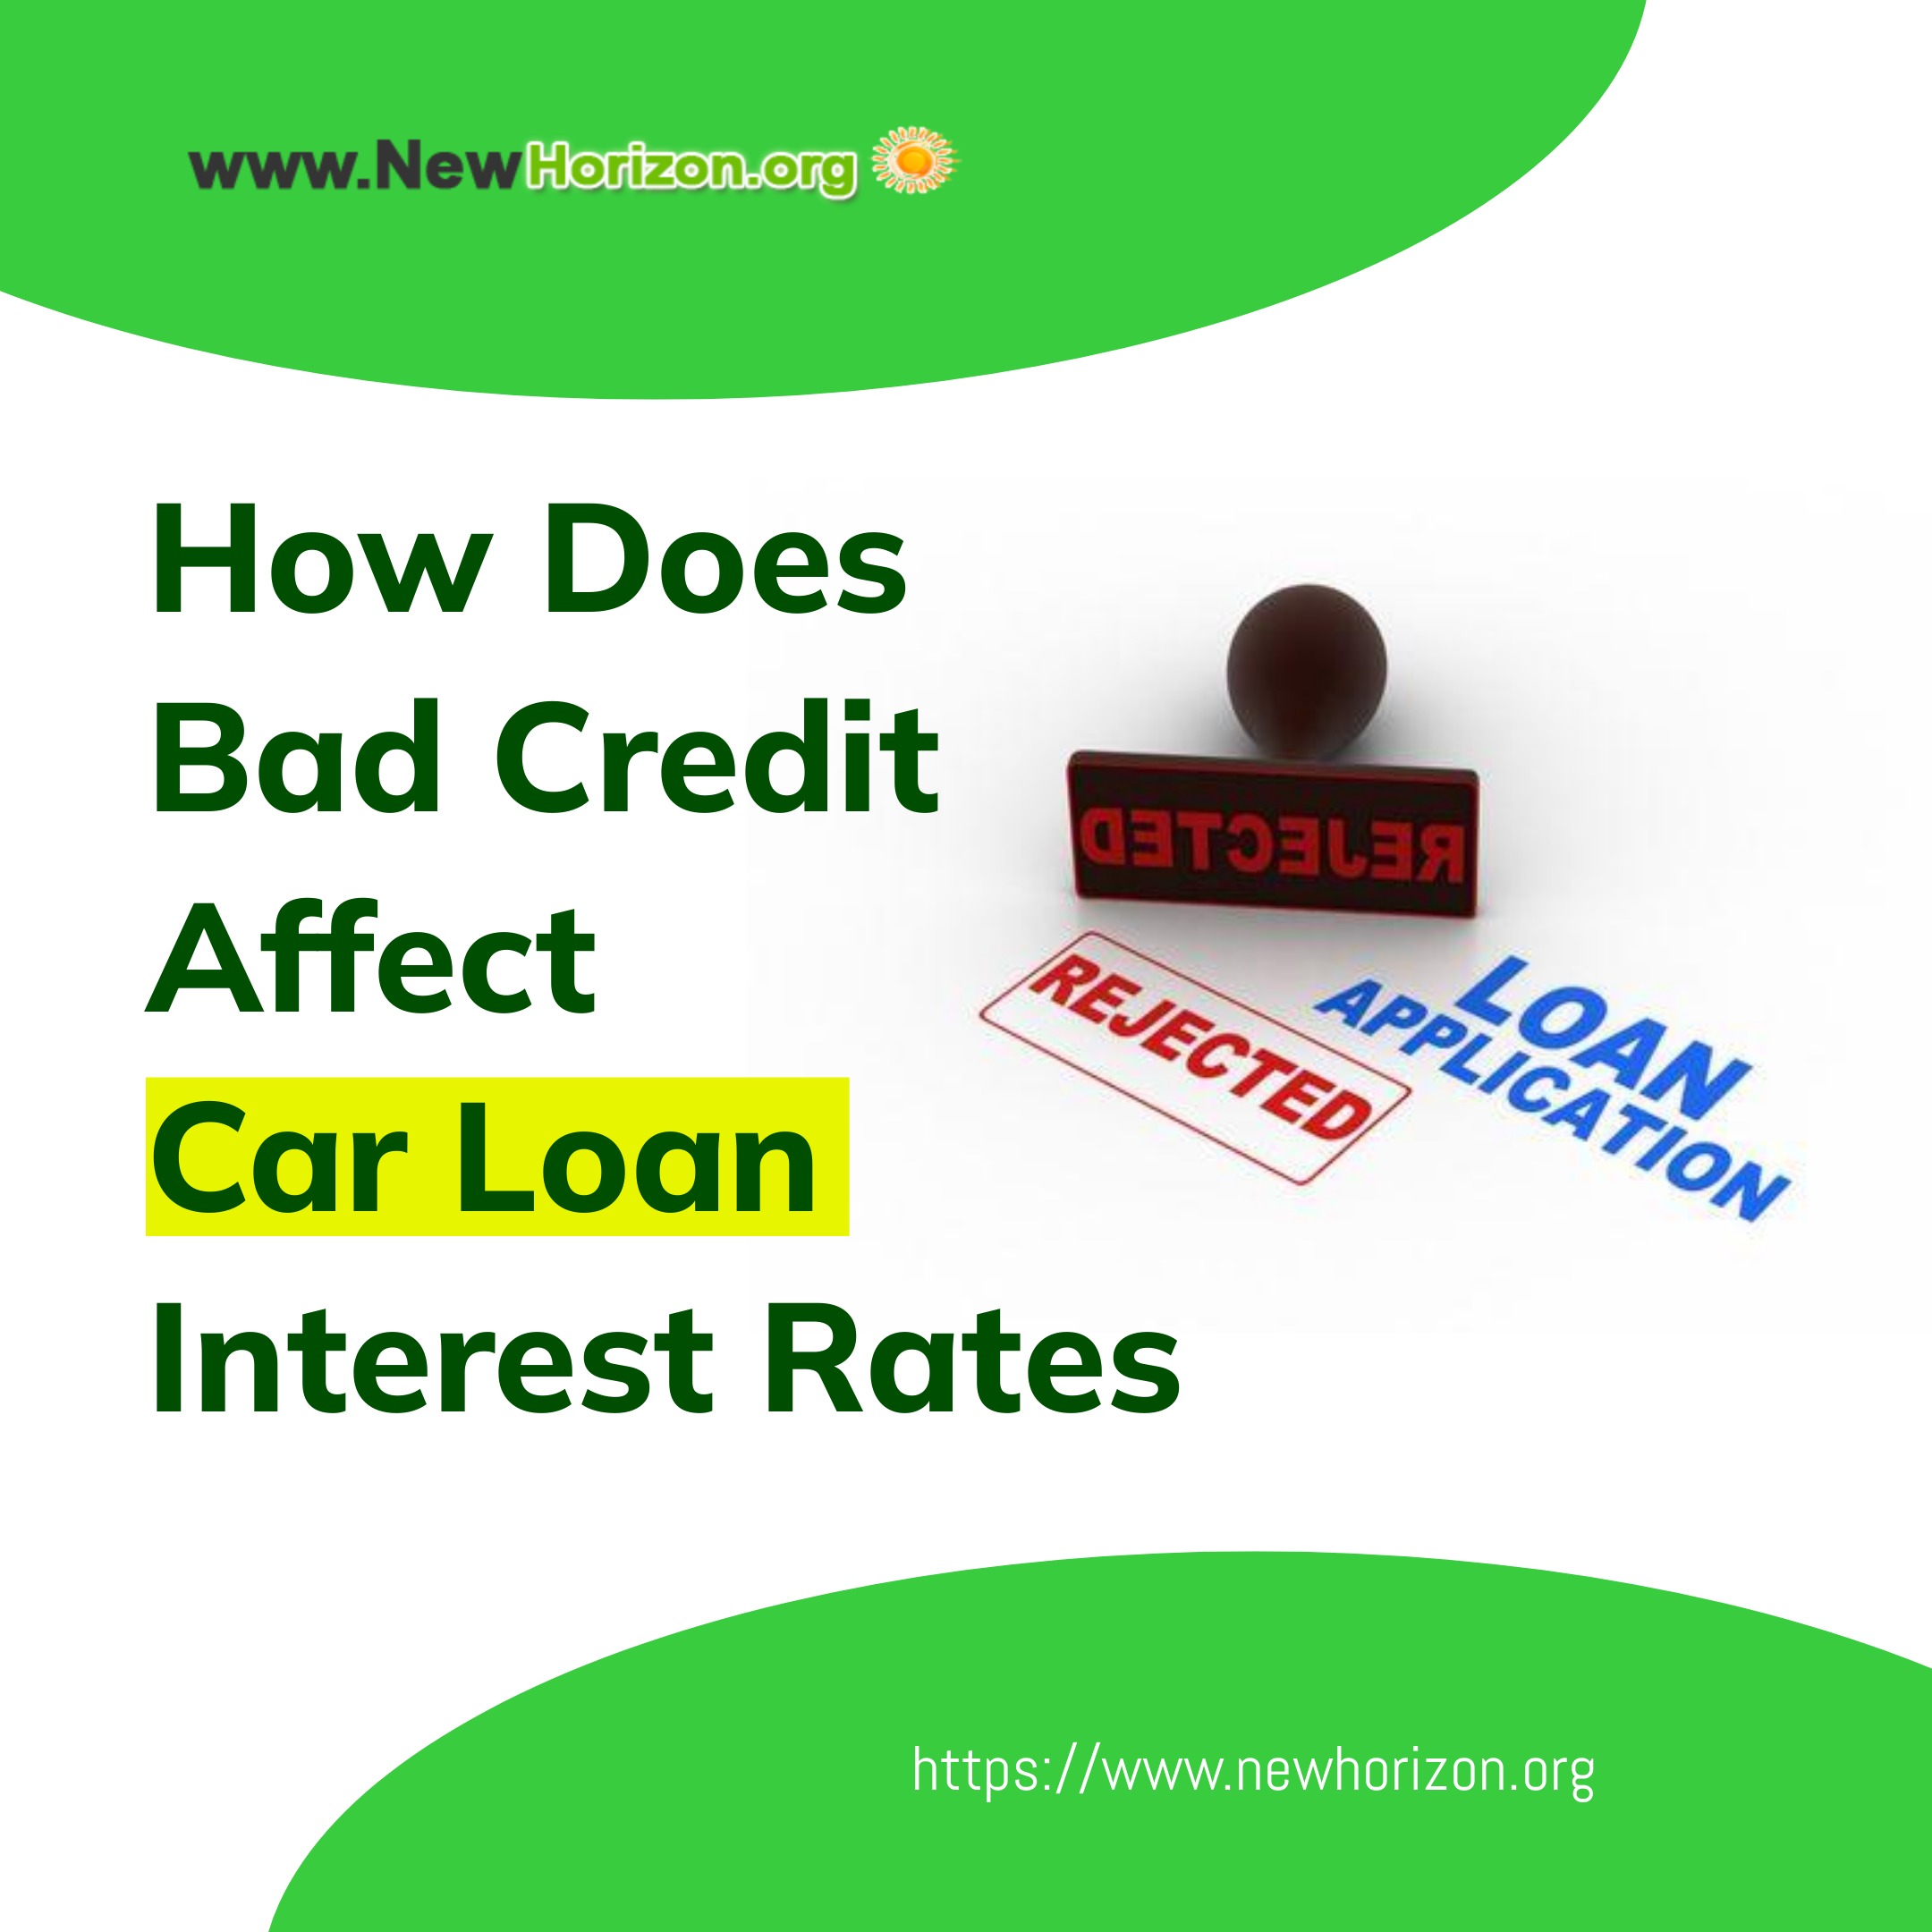 How Does Bad Credit Affect Car Loan Interest Rates_blog images